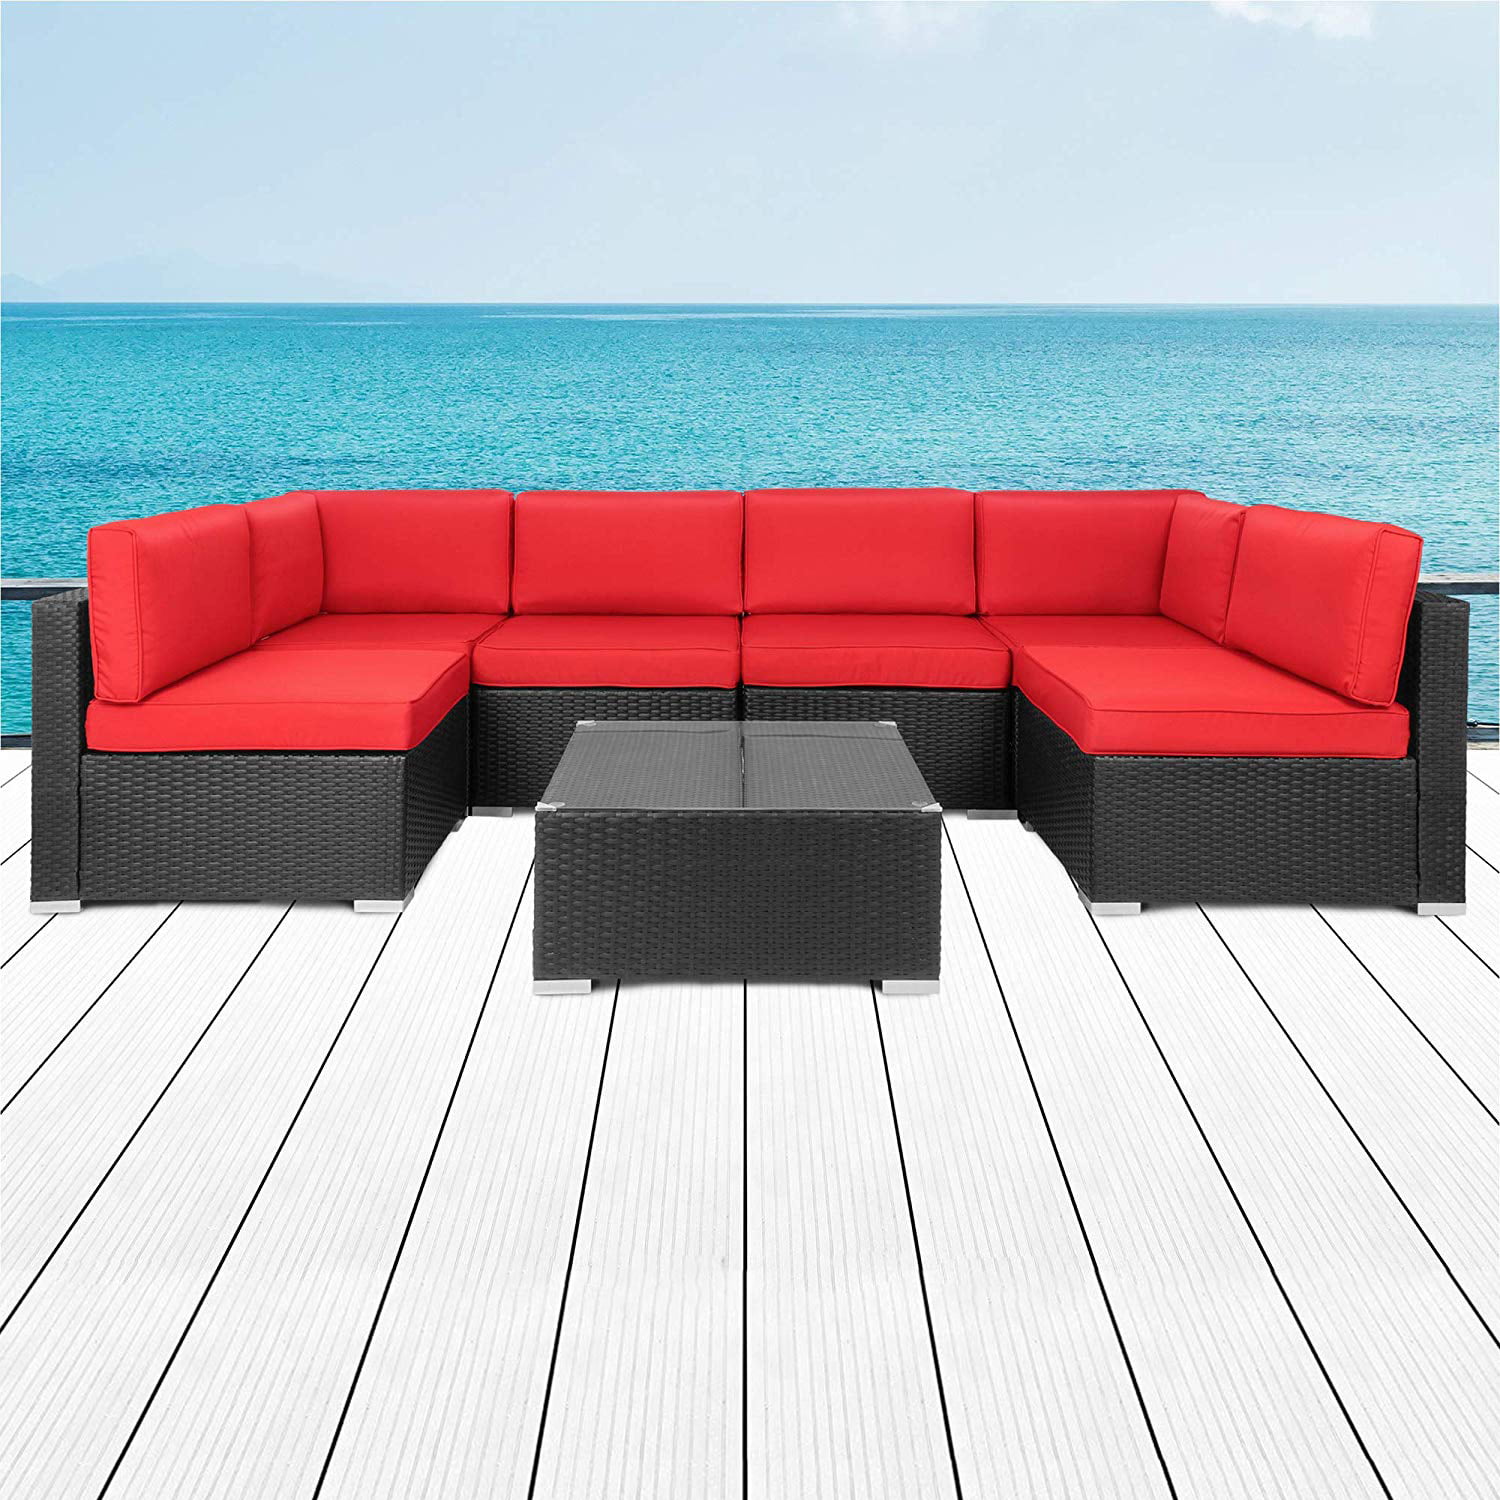 Kinbor 7pcs Outdoor Patio Furniture Sectional Pe Wicker Rattan